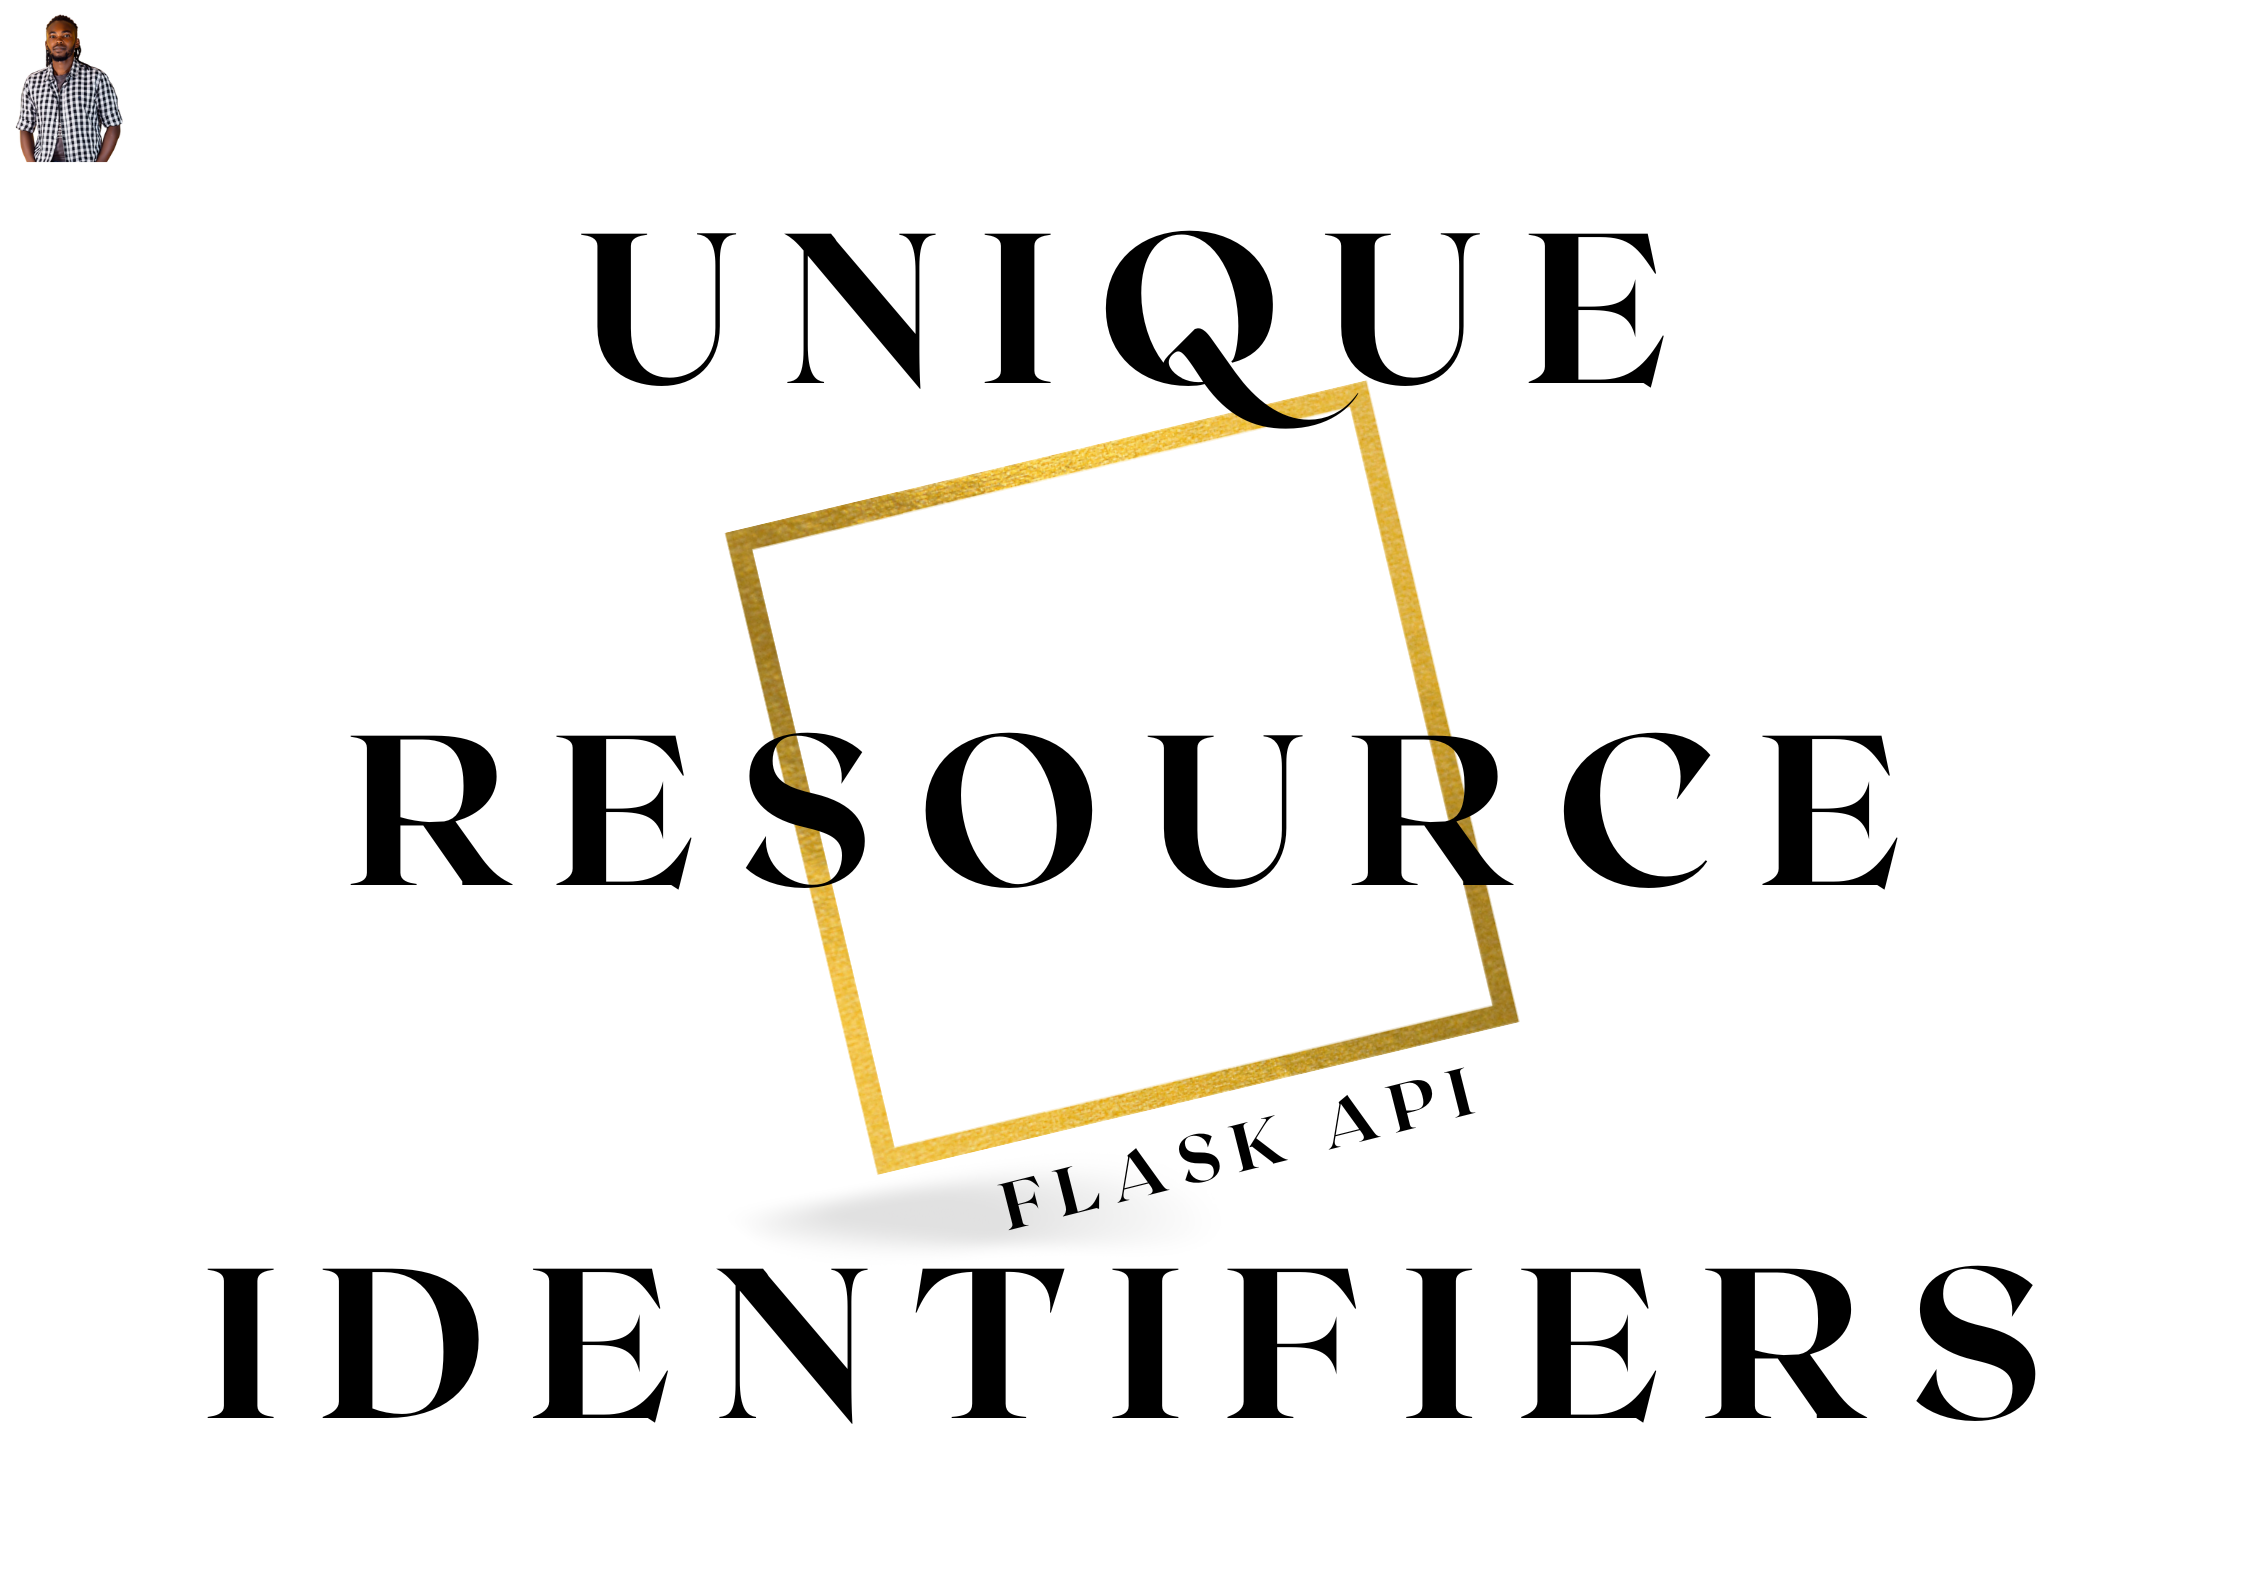 Unique Resource Identifiers In Flask API